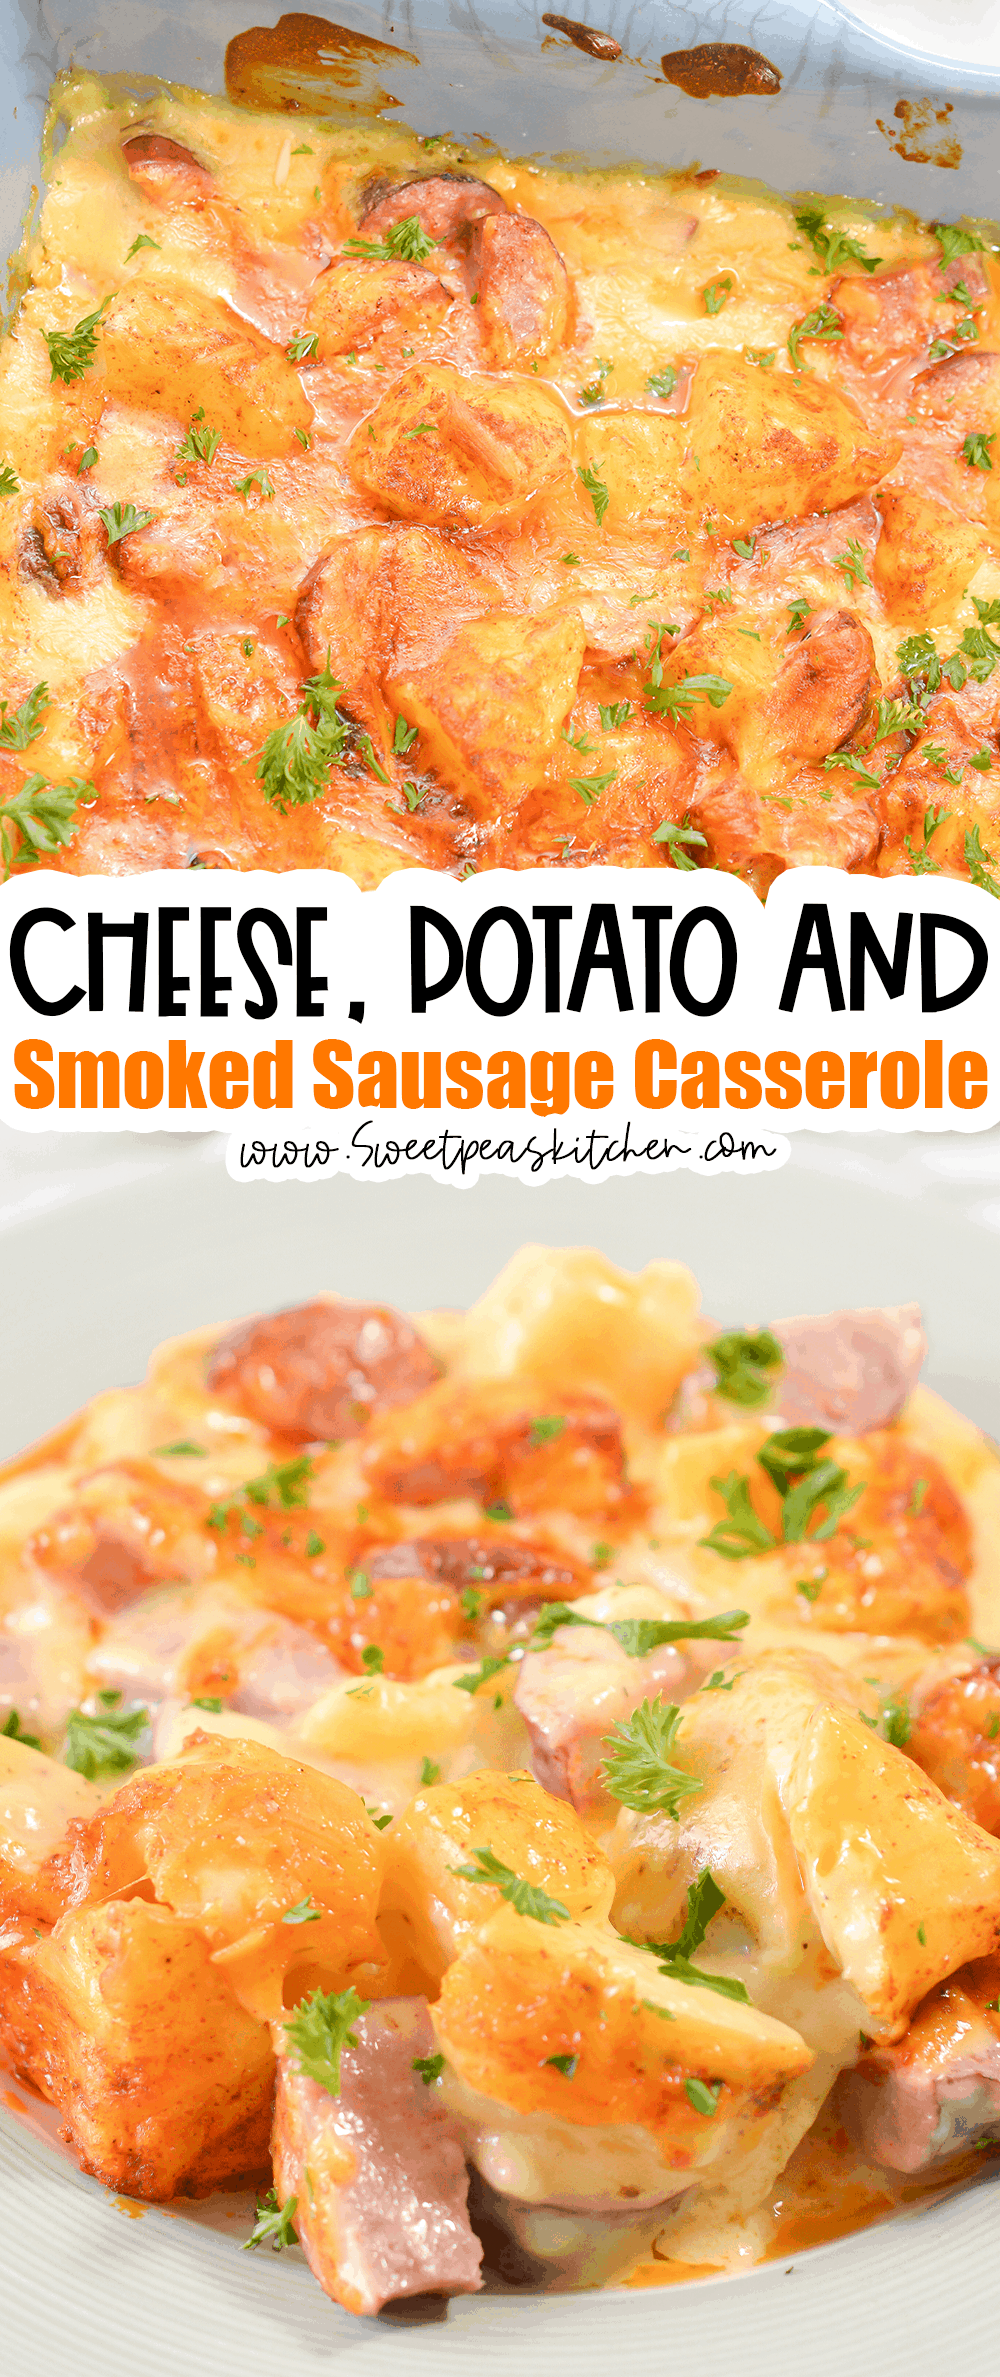 Cheese, Potato and Smoked Sausage Casserole